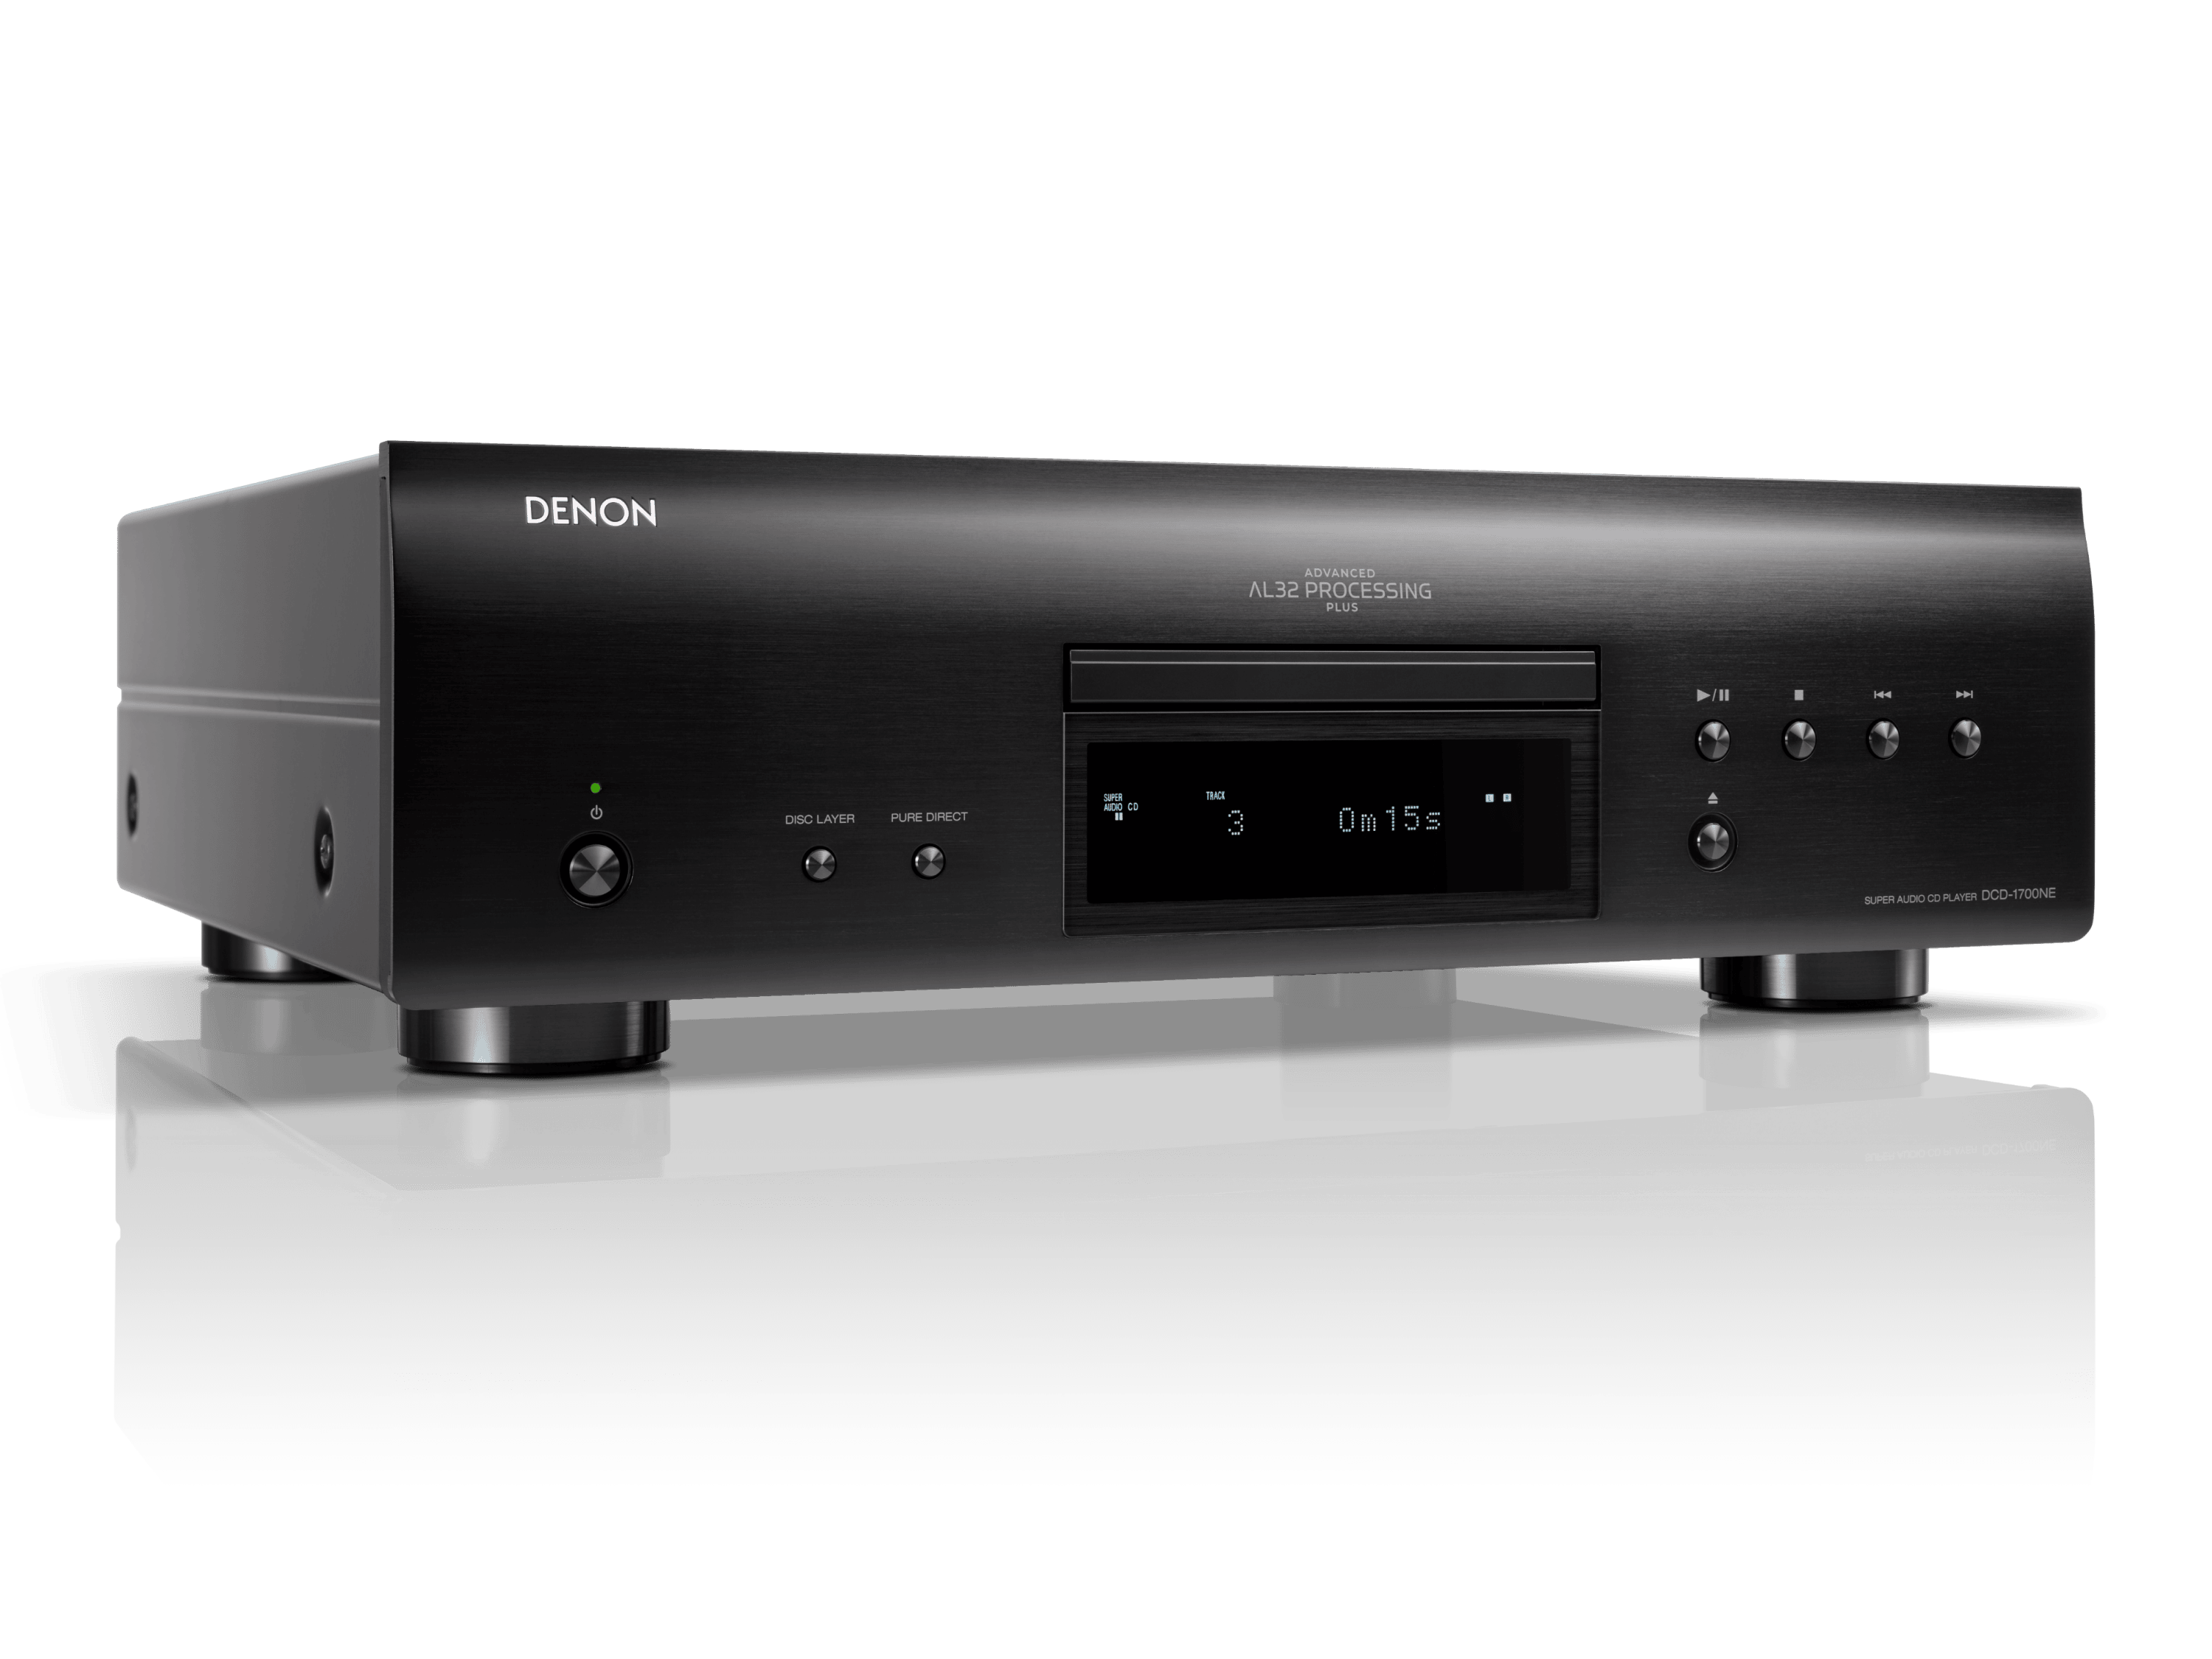 DCD-1700NE - CD/SACD-Player DCD-1700NE mit Advanced AL32 Processing Plus |  Denon - Europe